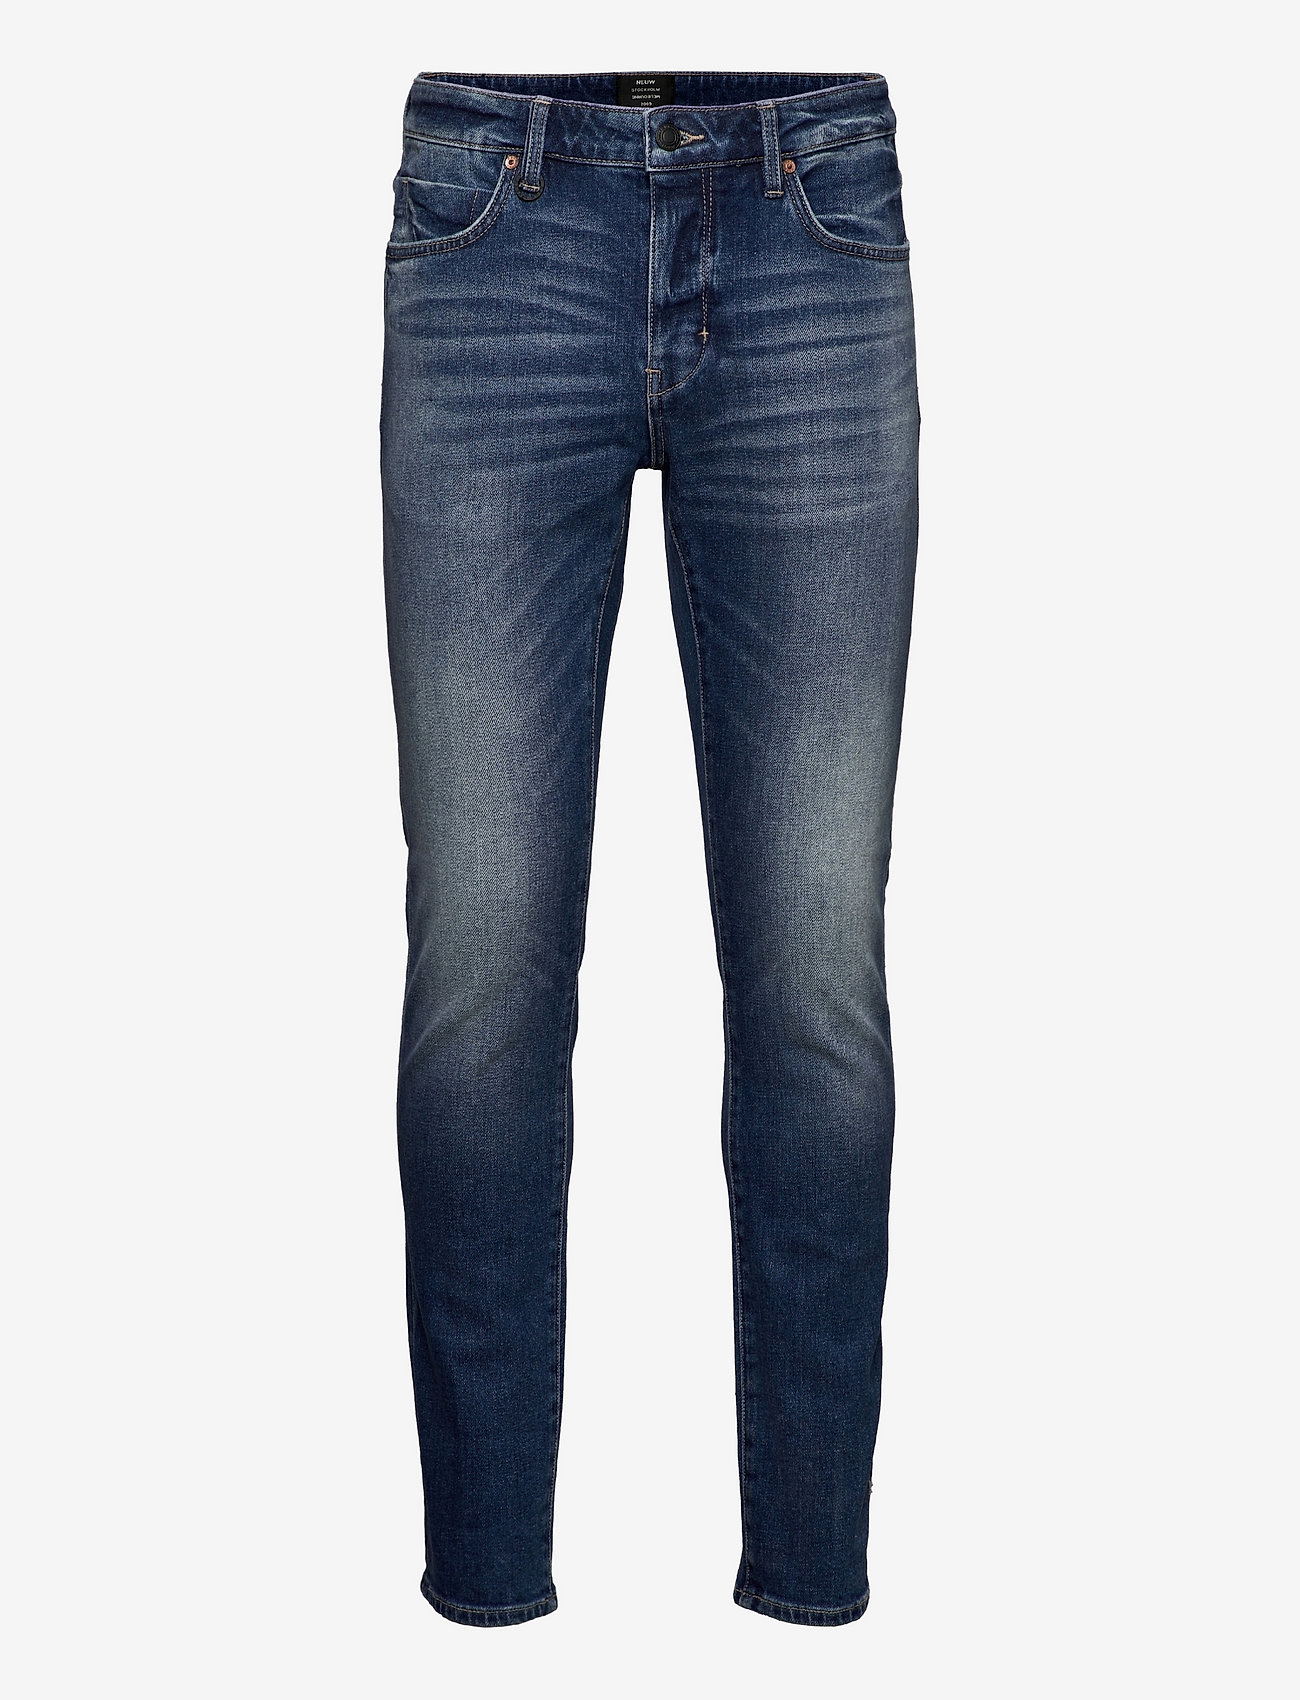 NEUW - IGGY SKINNY - skinny jeans - jupiter - 0